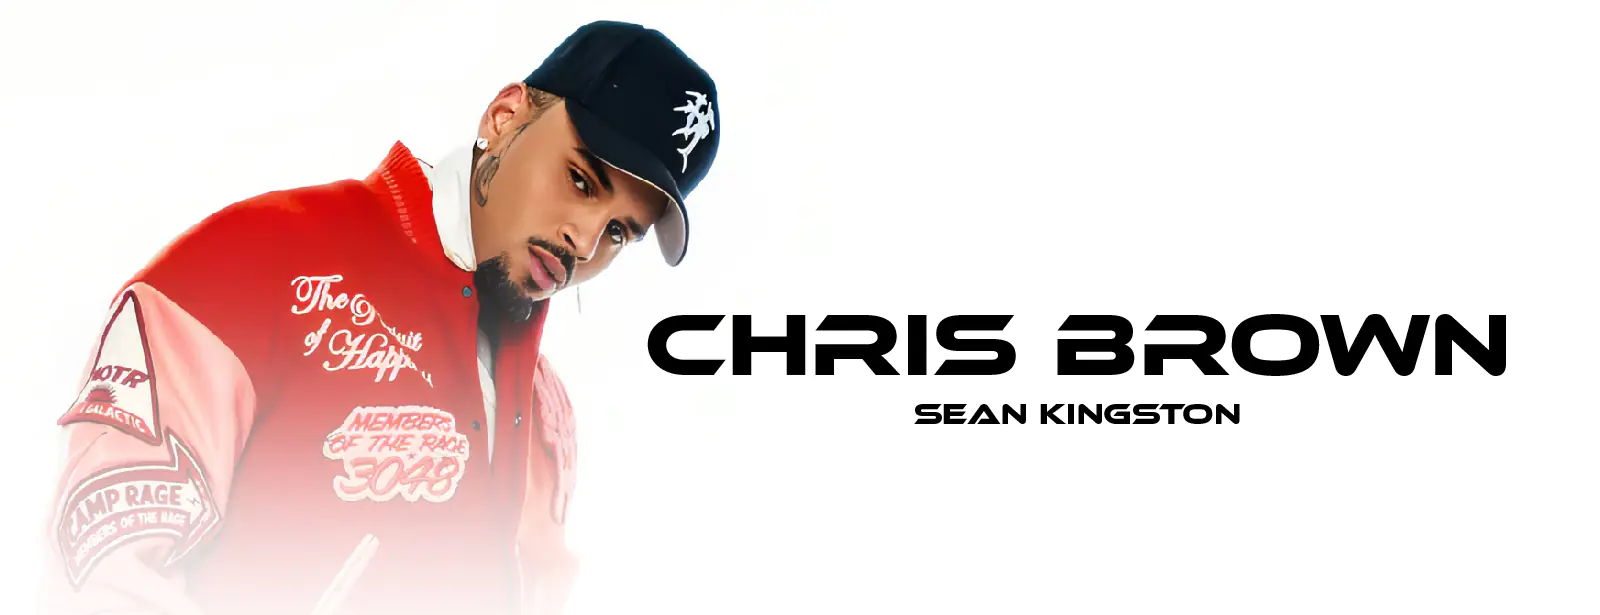 Chris Brown Live Concert in Coca-Cola Arena, Dubai - Coming Soon in UAE